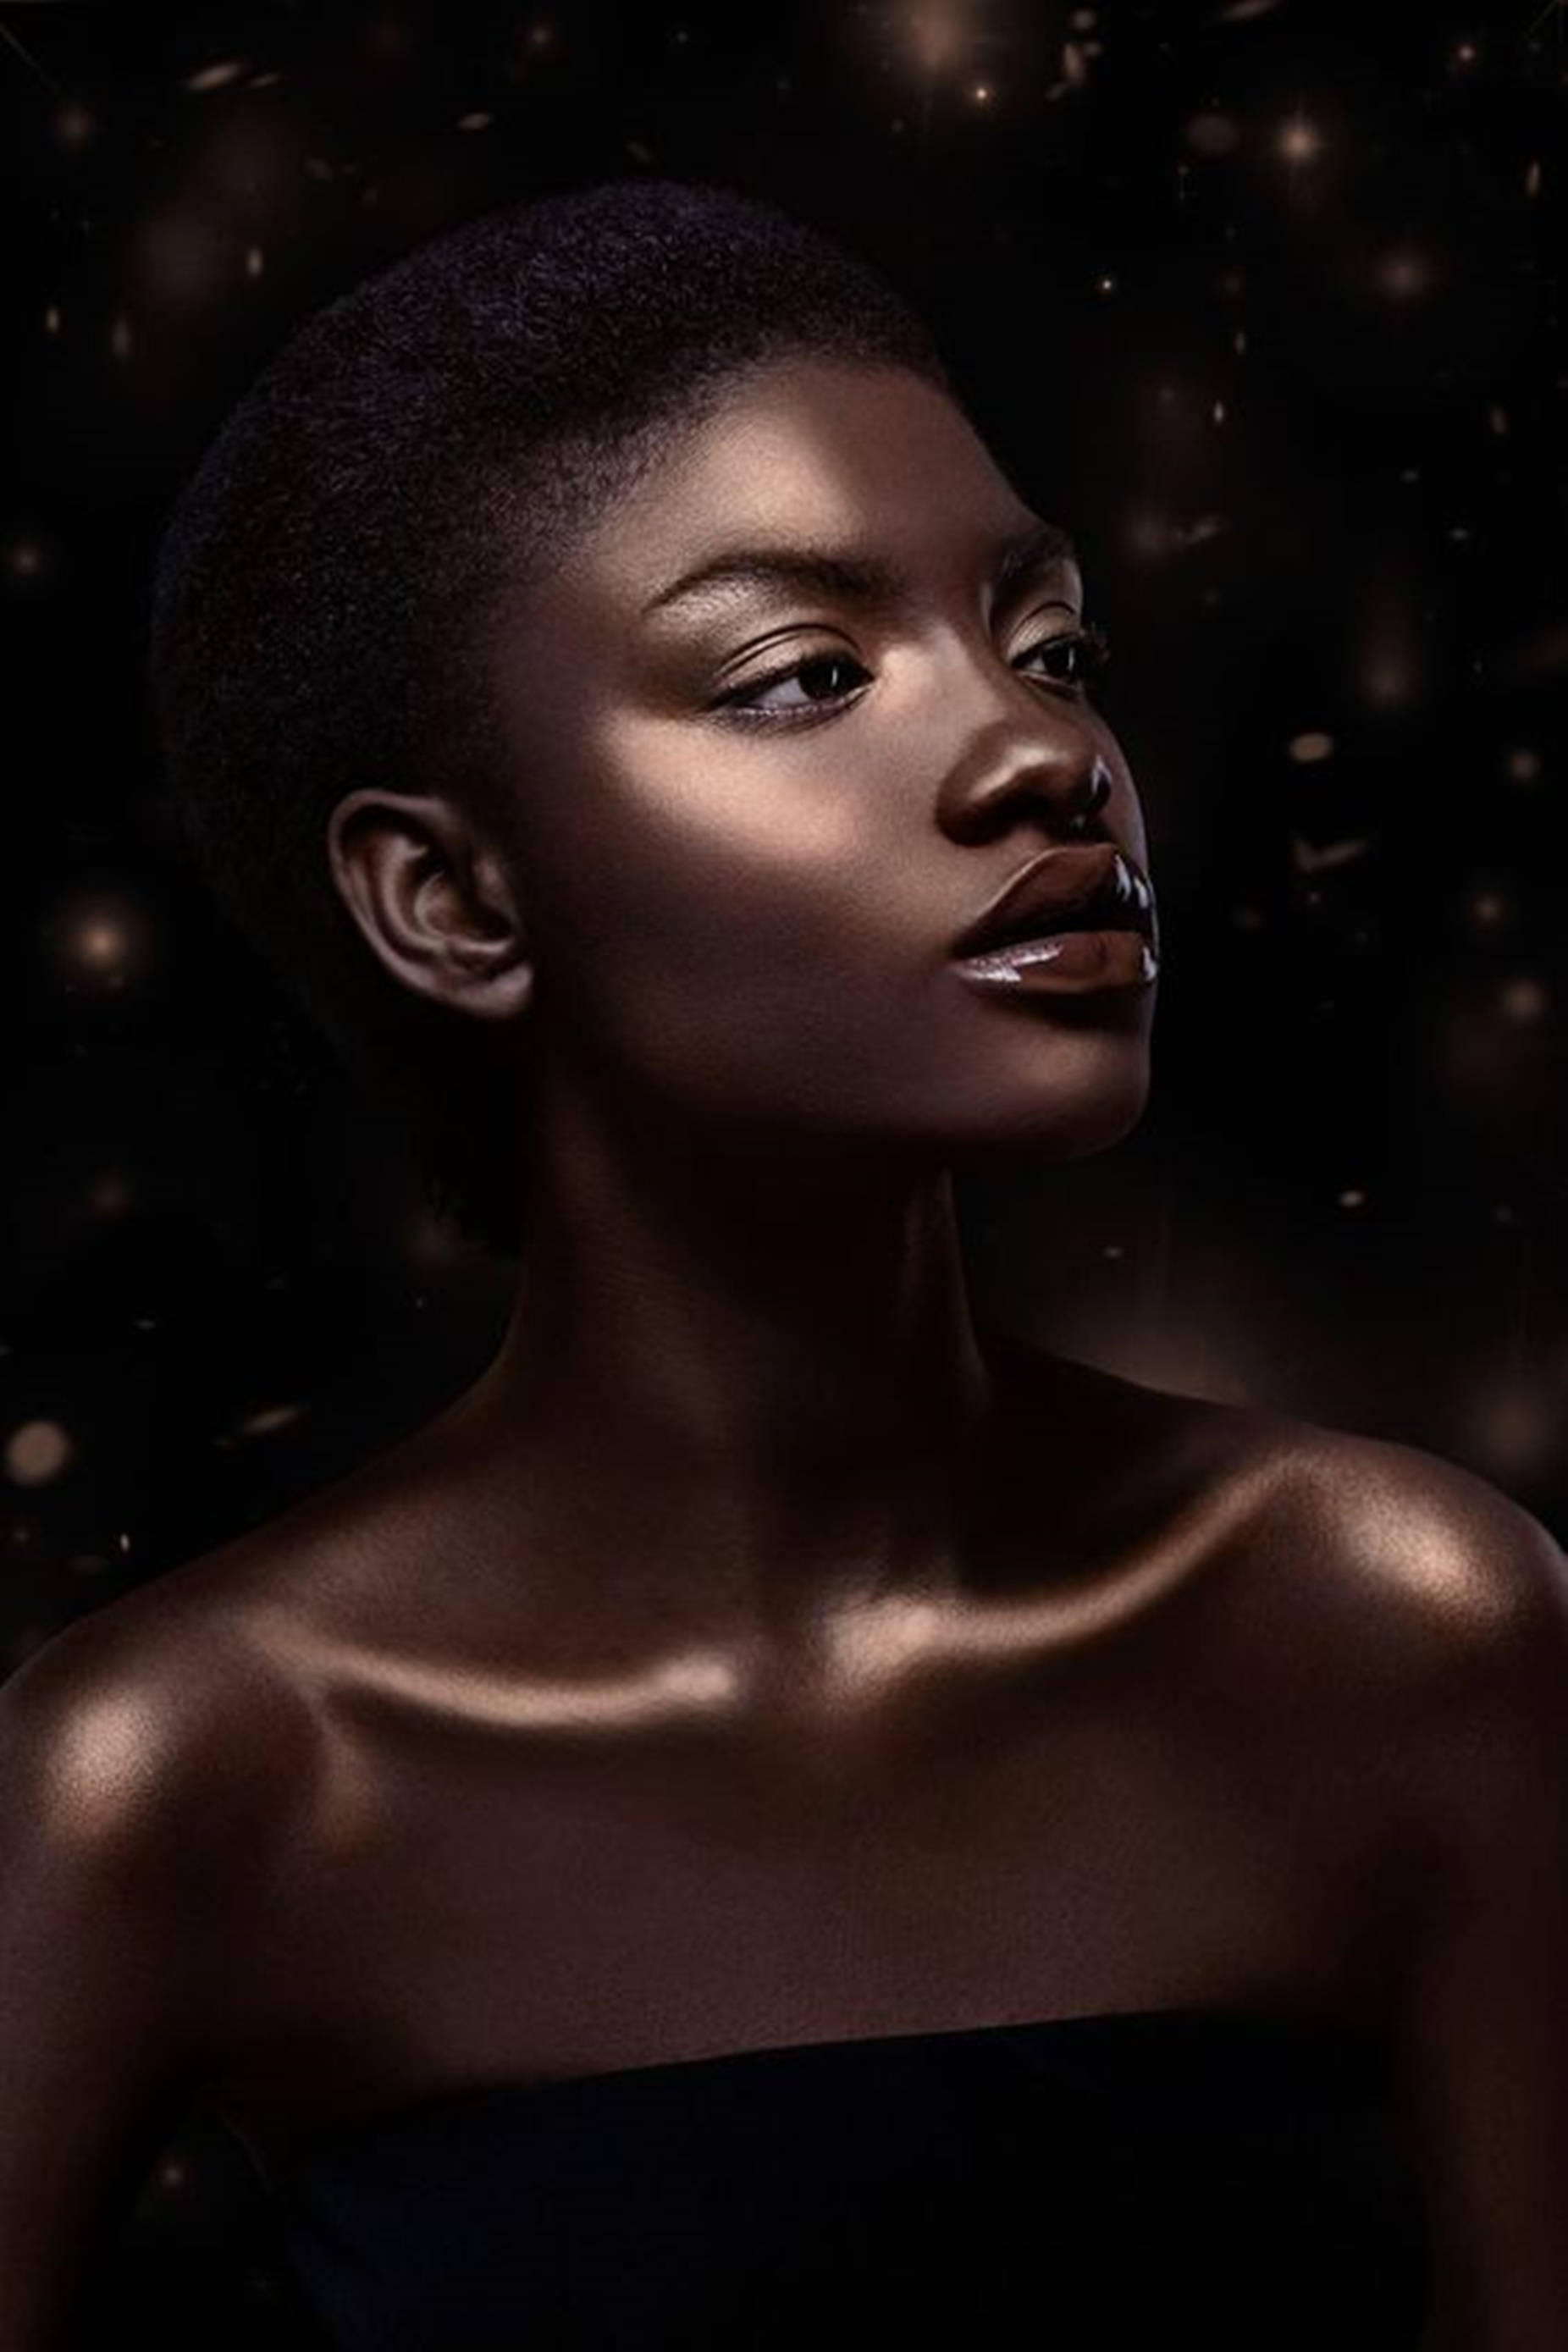 100+] Beautiful Black Woman Wallpapers | Wallpapers.com